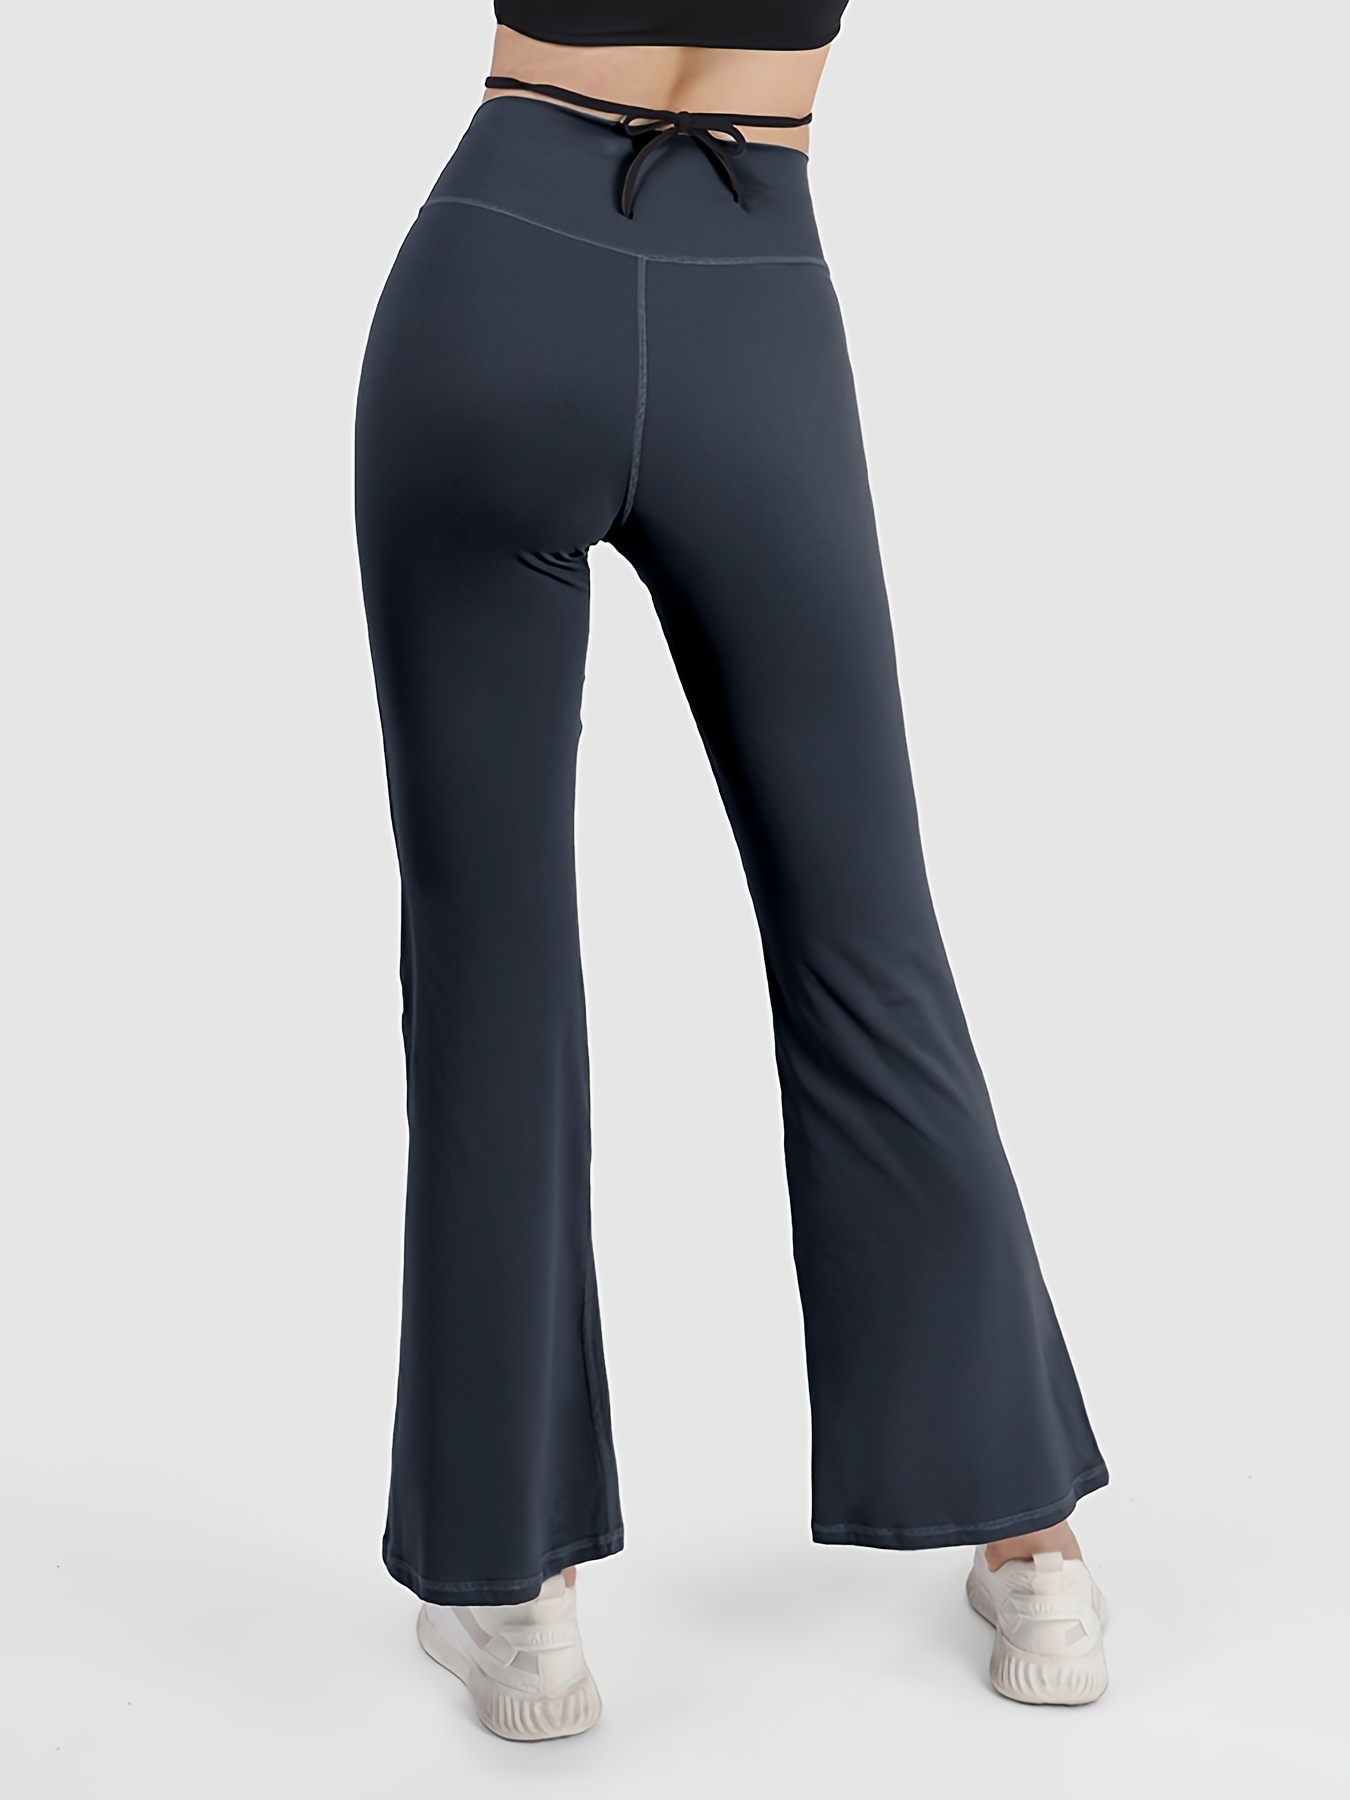 FELEMO Women's Bootcut Yoga Pants High Waist Workout Pants 4 Way Stretch  Tummy Control Work Pants Flare Pants(Cameo/3XL)